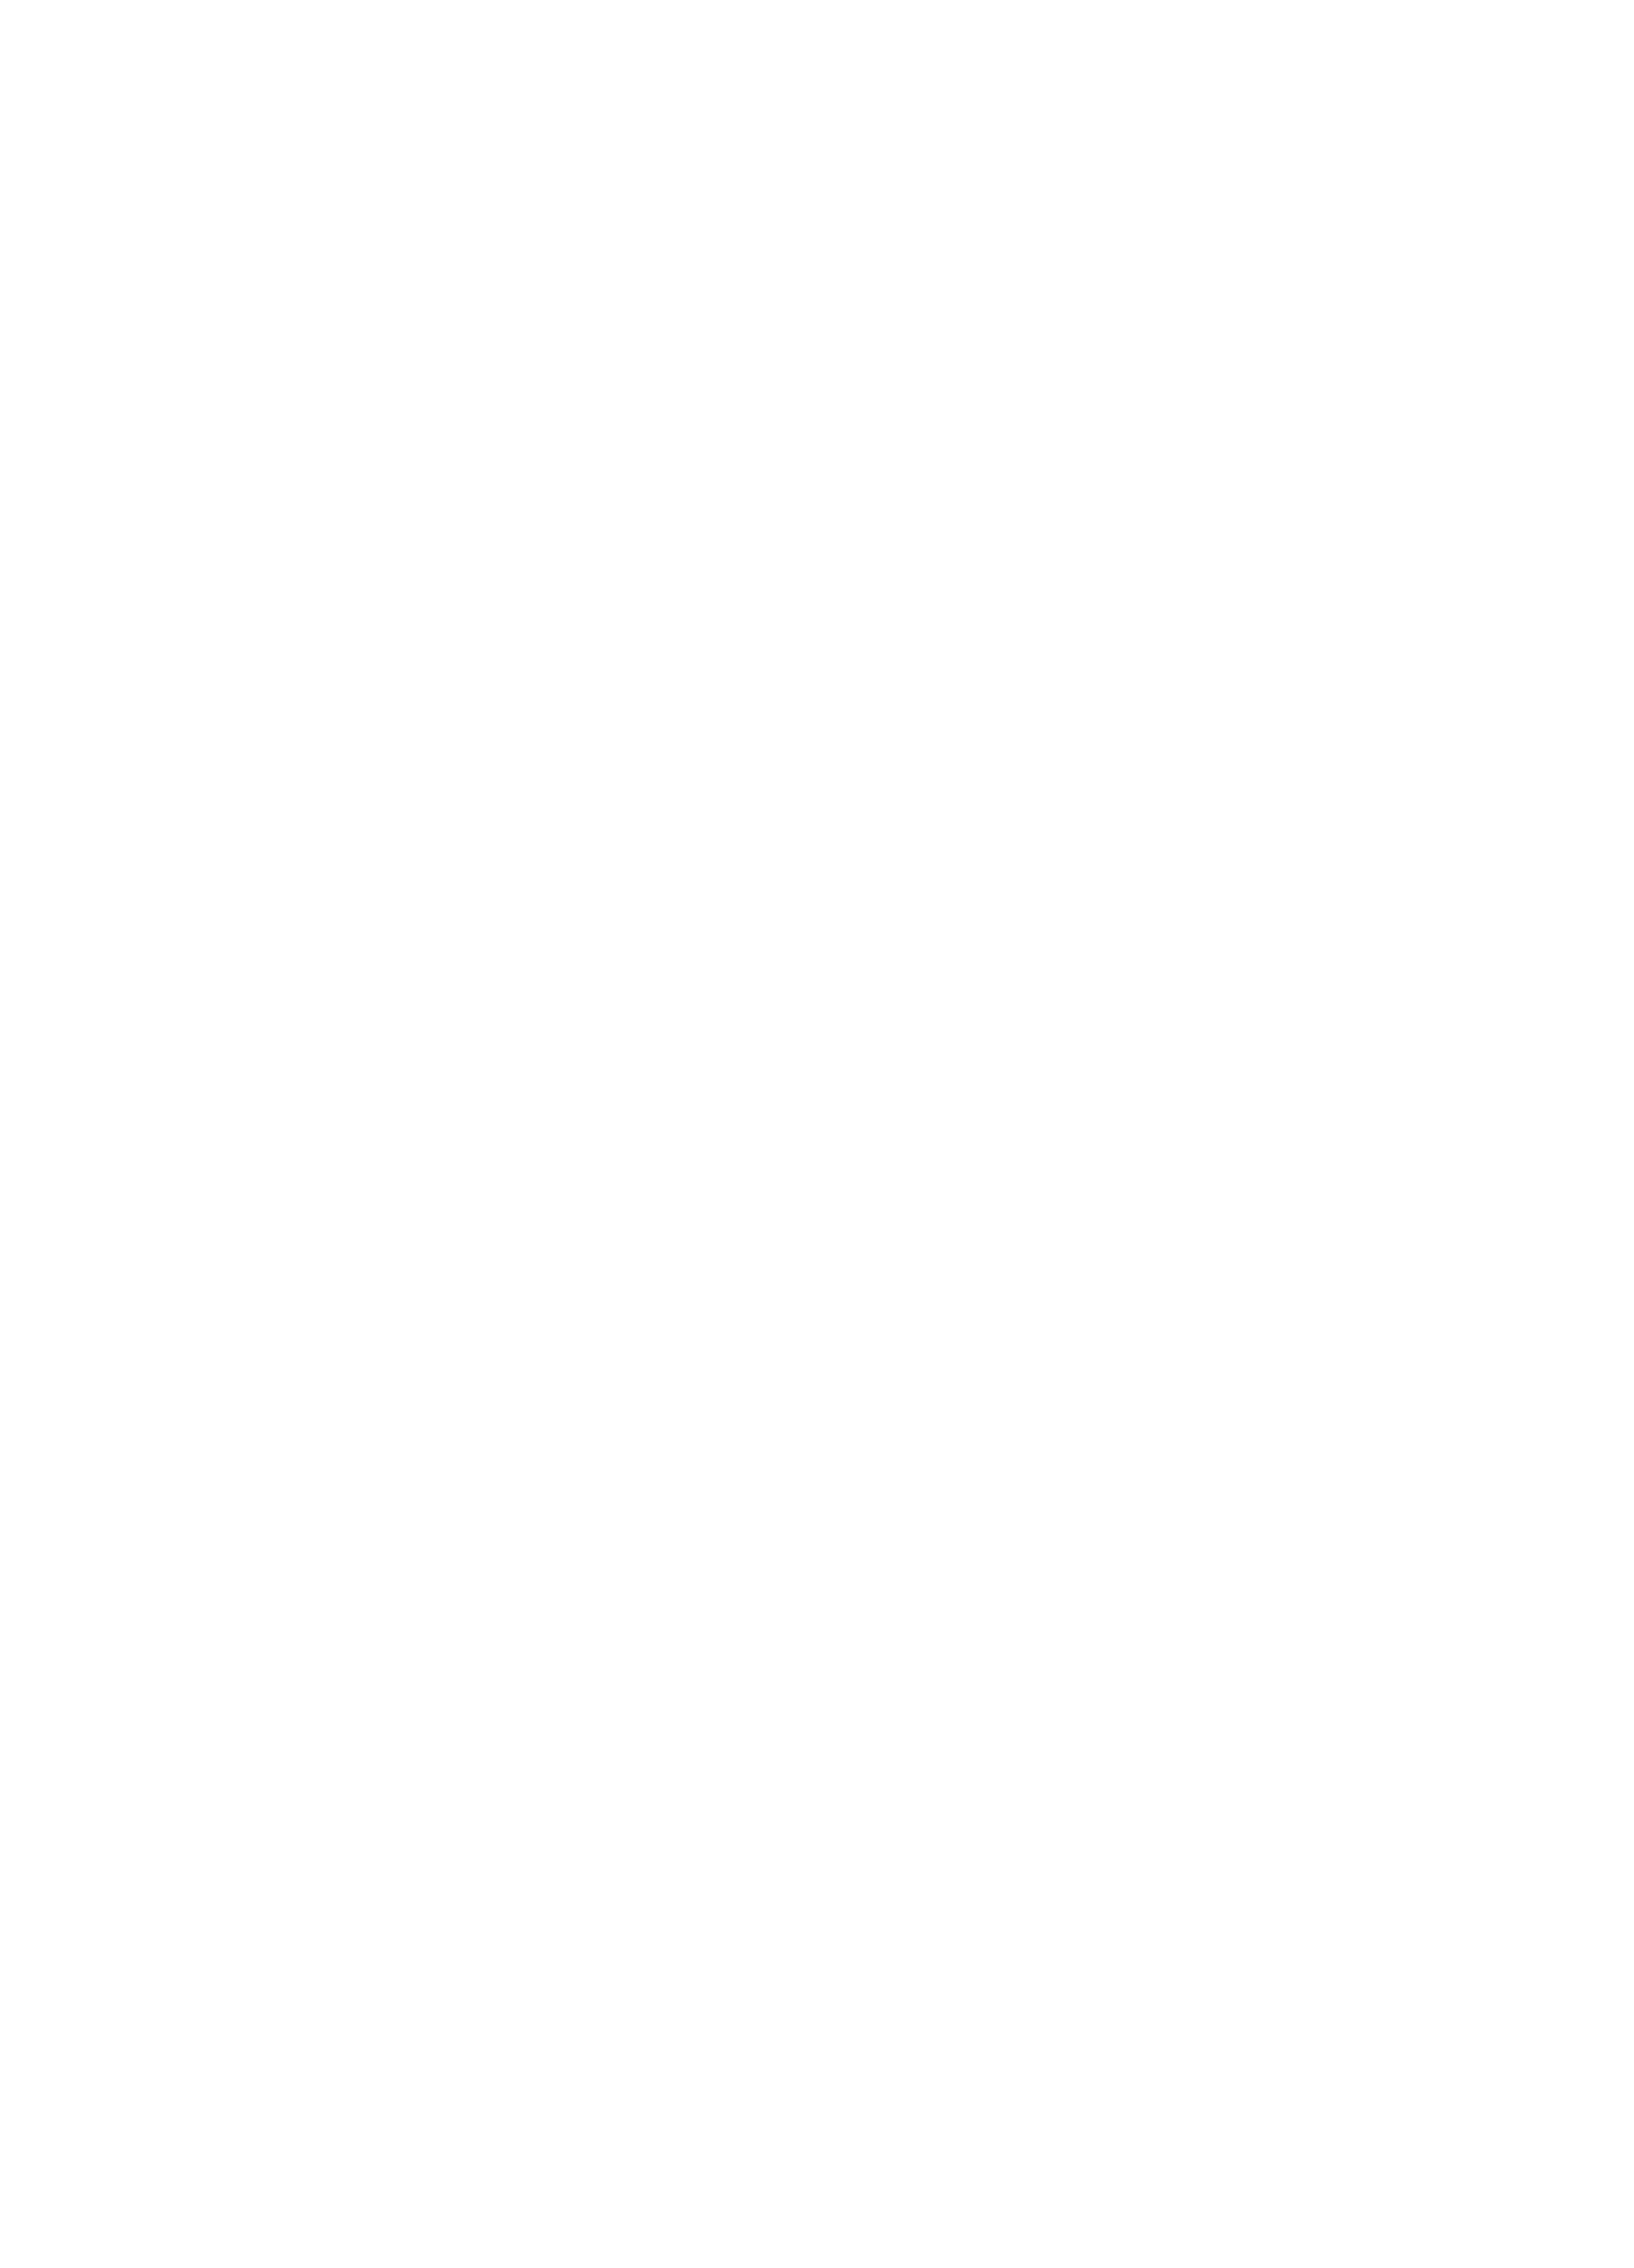 wainba-caption